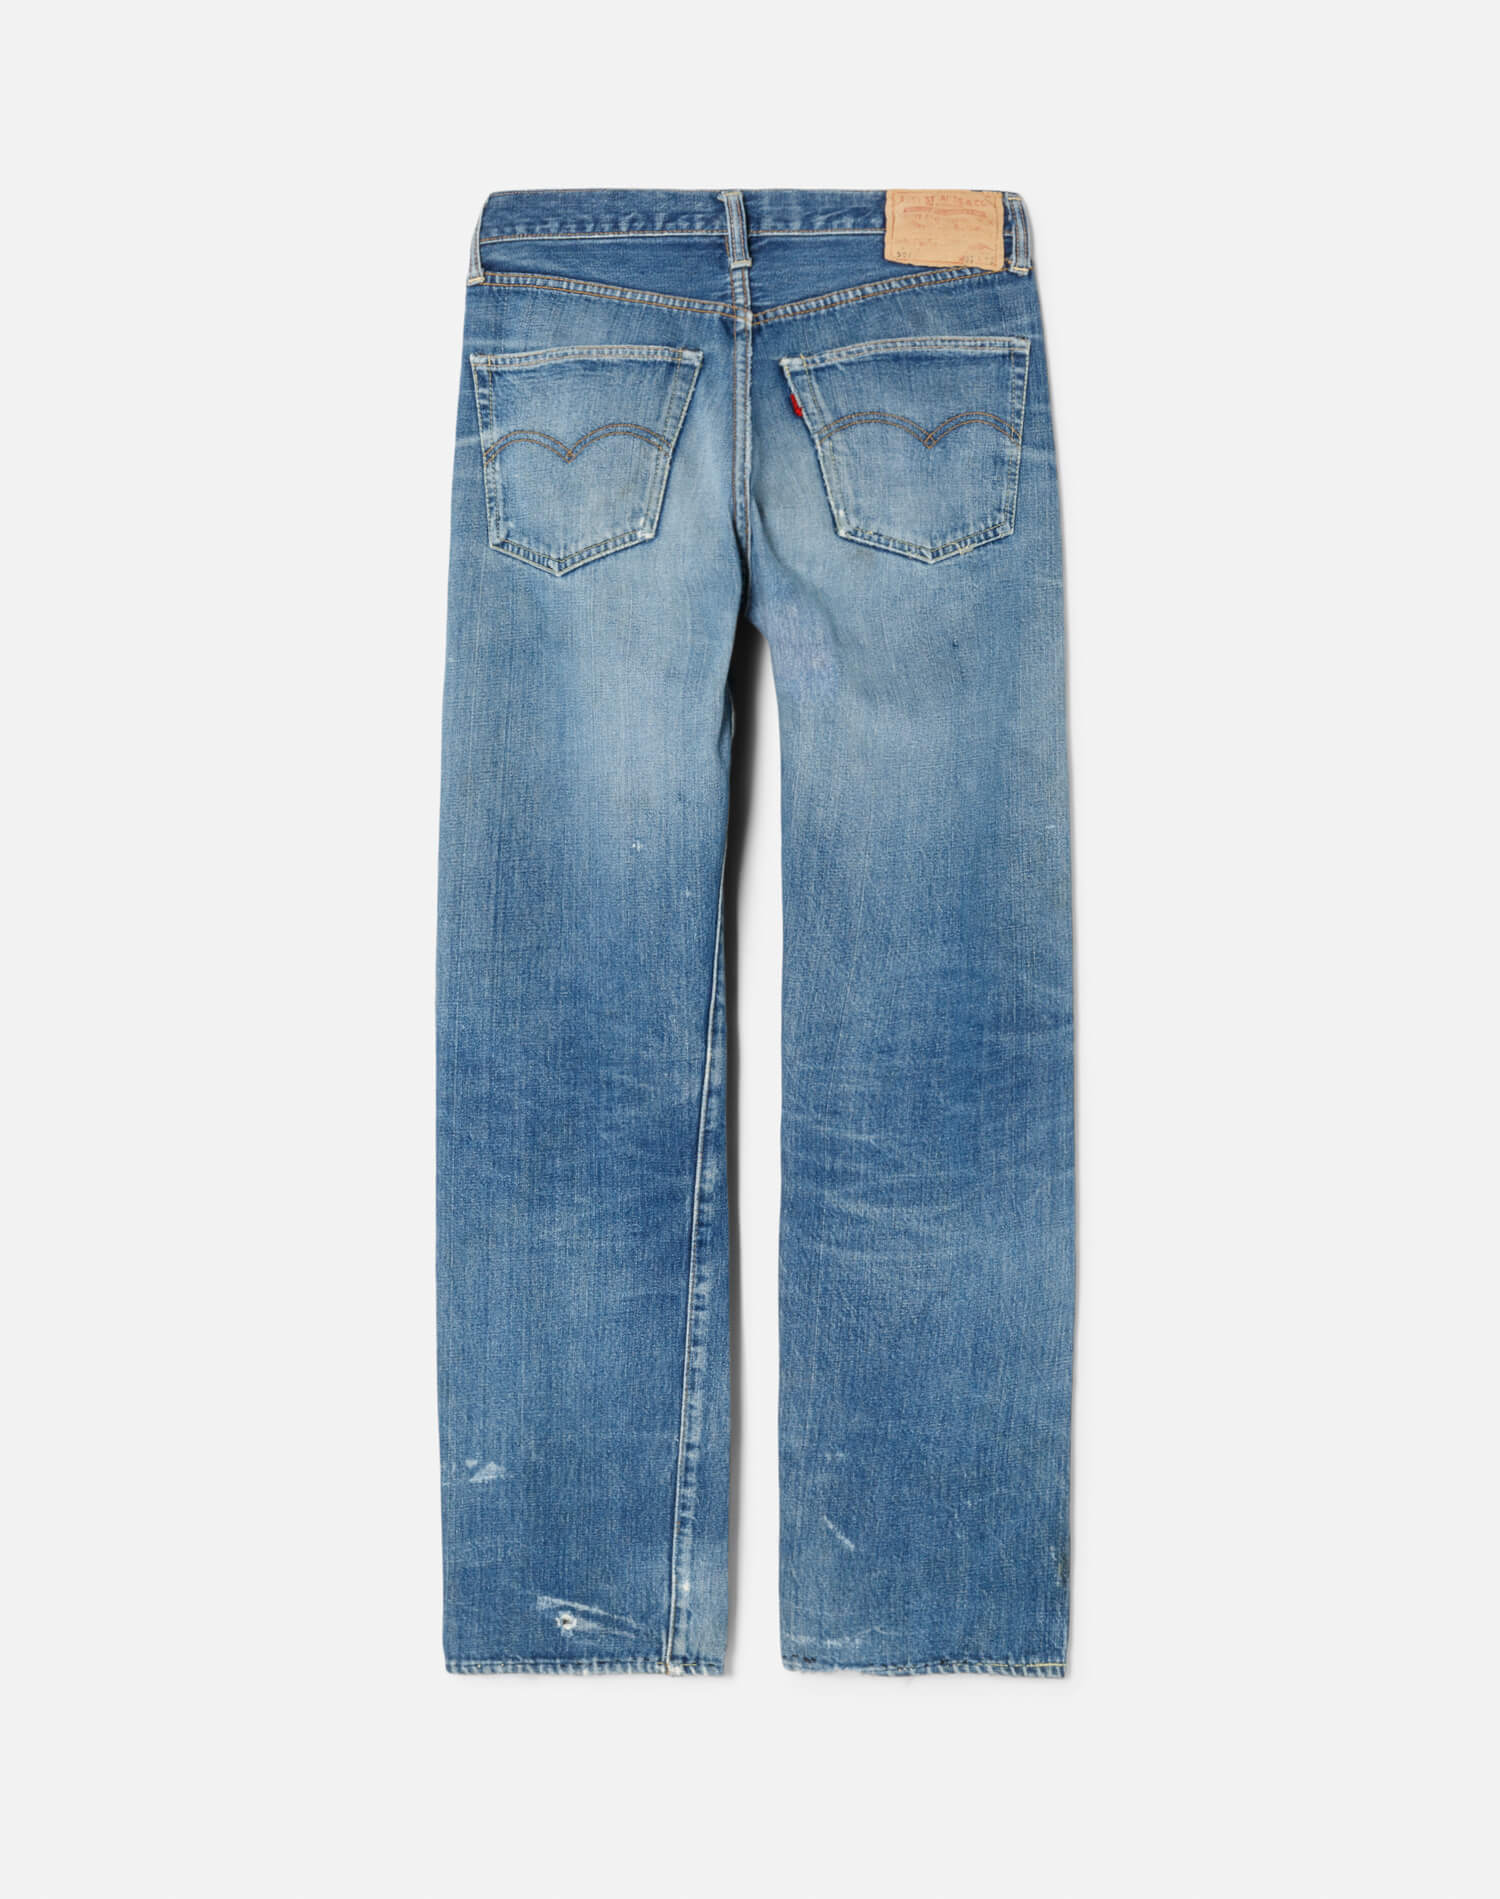 60s Levi's Big E 501 Jeans - #654